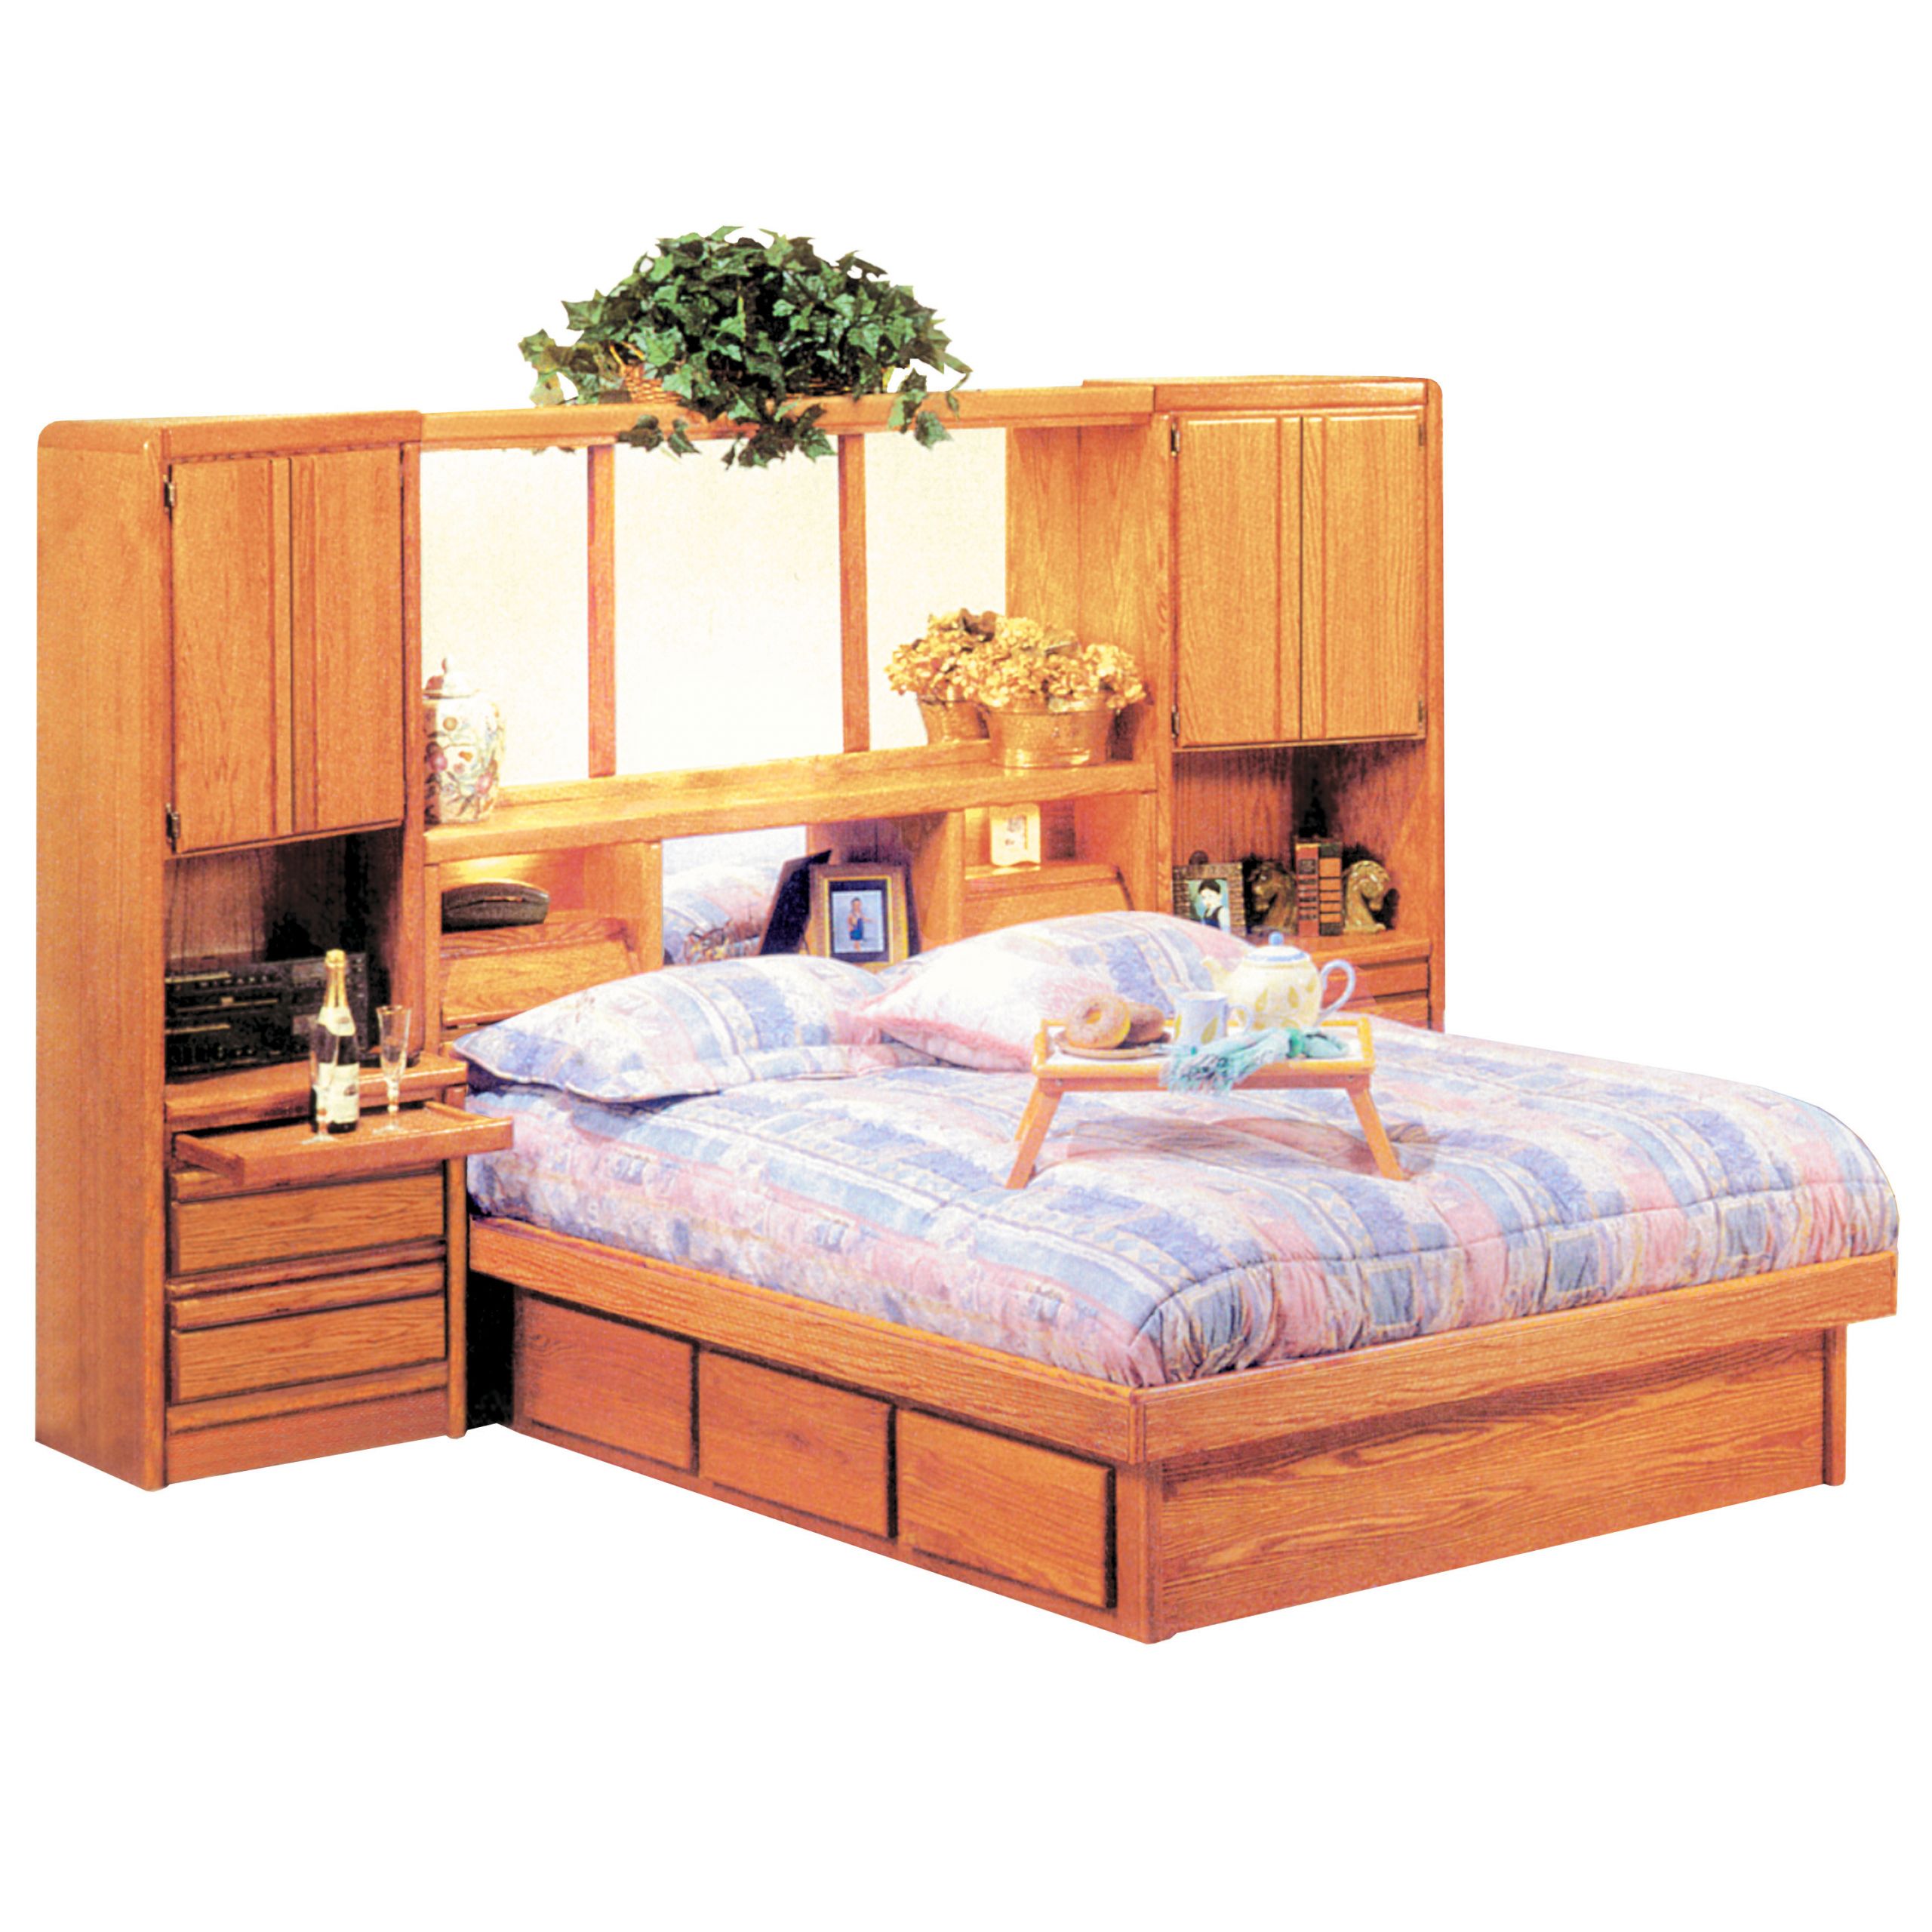 Wall Unit Bedroom Furniture
 Coronado Wall Unit with La Jolla Casepieces InnoMax